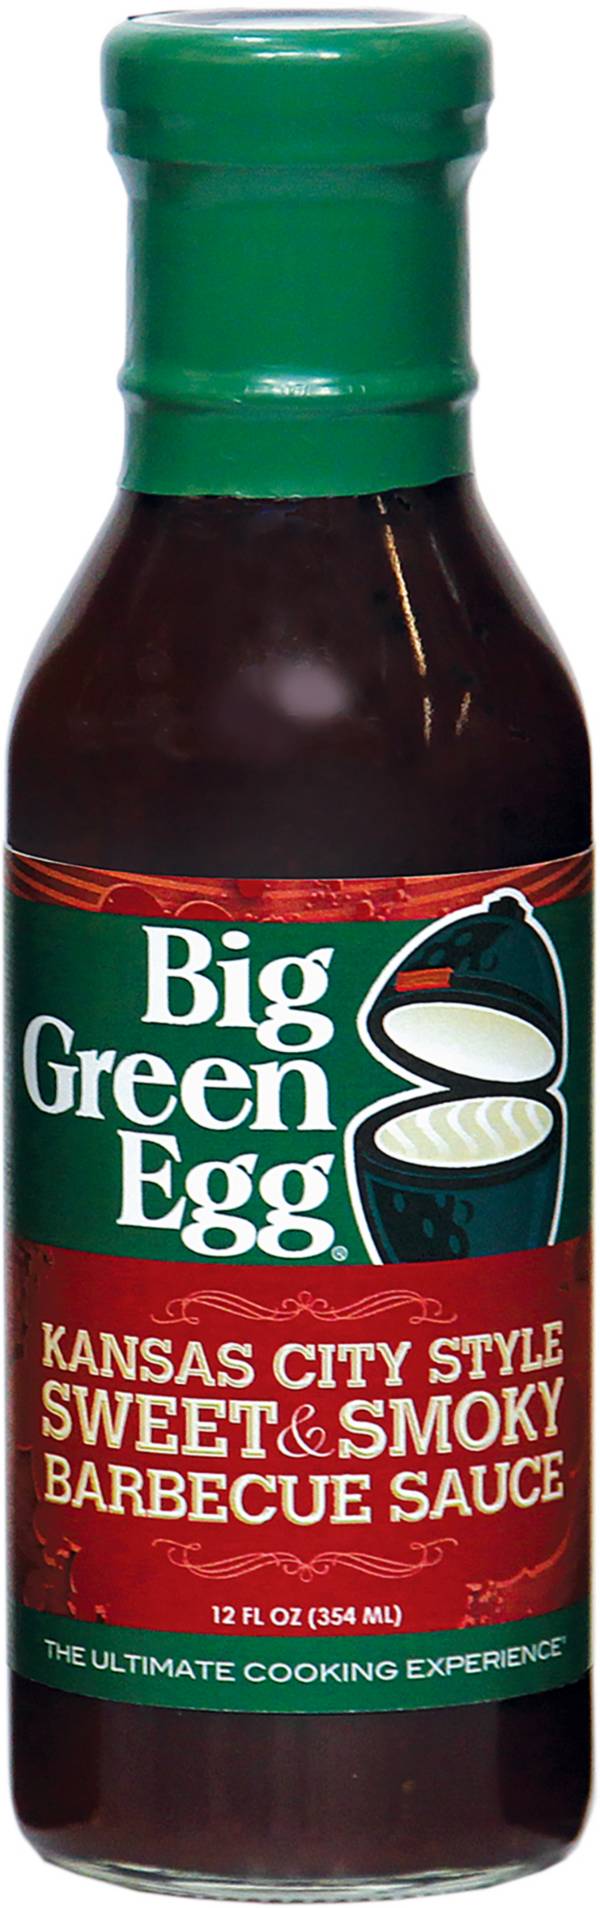 Big Green Egg Kansas City Barbeque Sauce product image